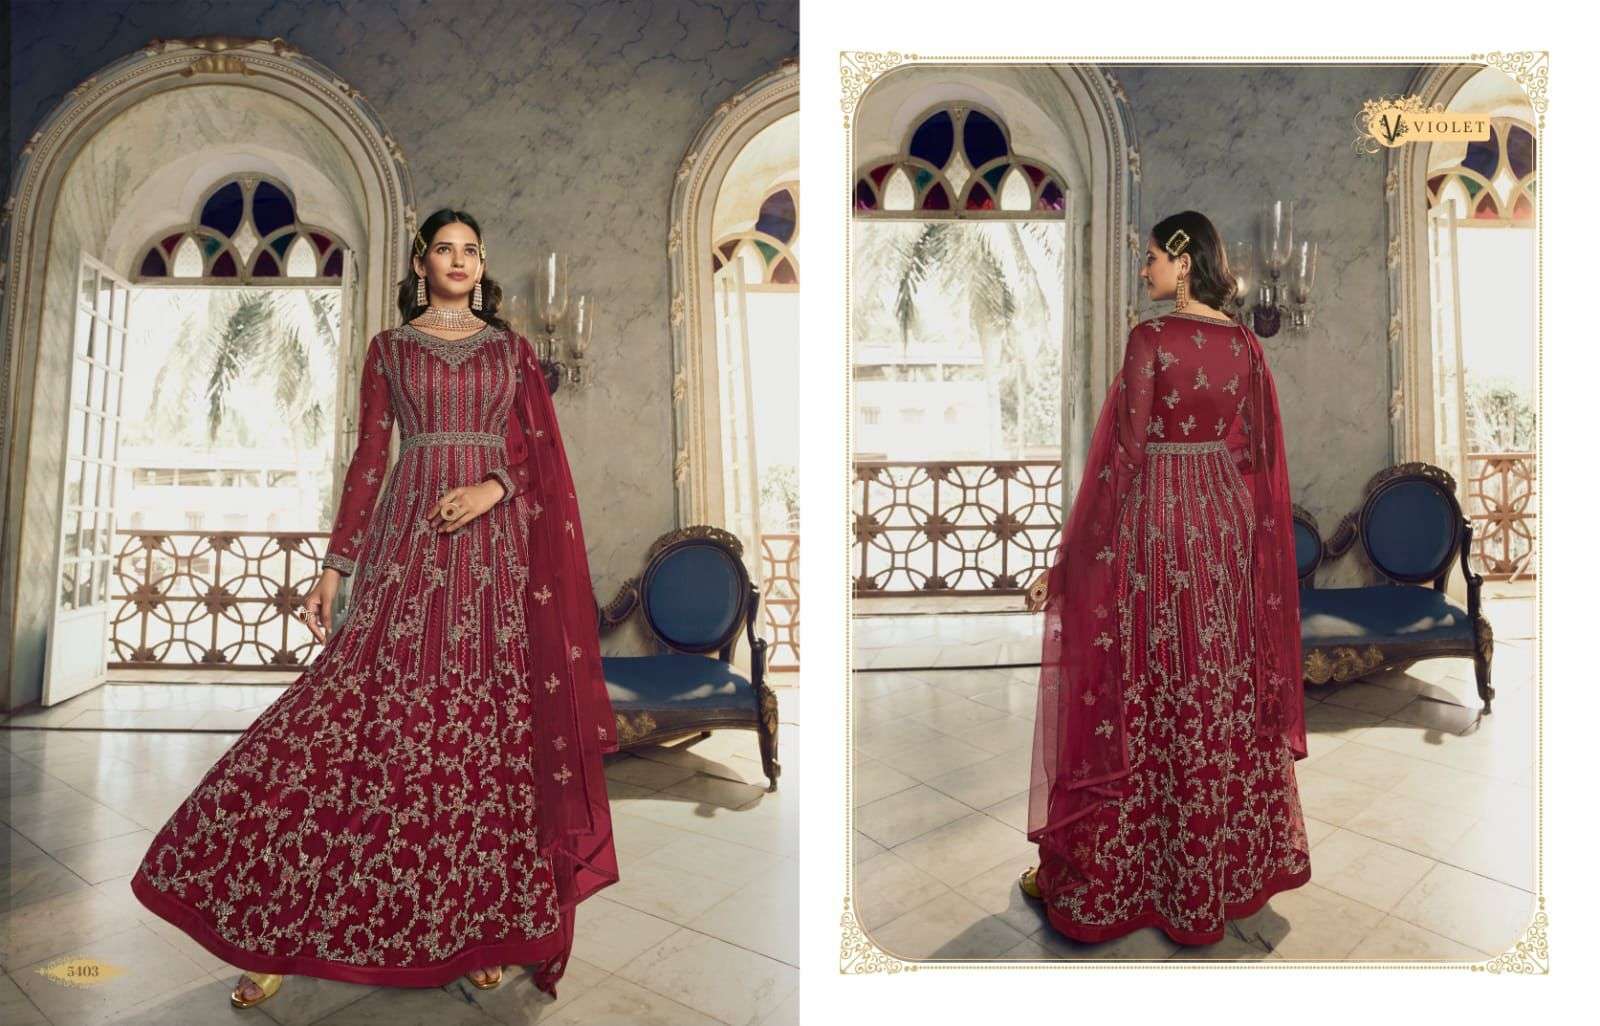 swagat violet 5401-5408 series festival collection party wear salwar suits wholesale price surat